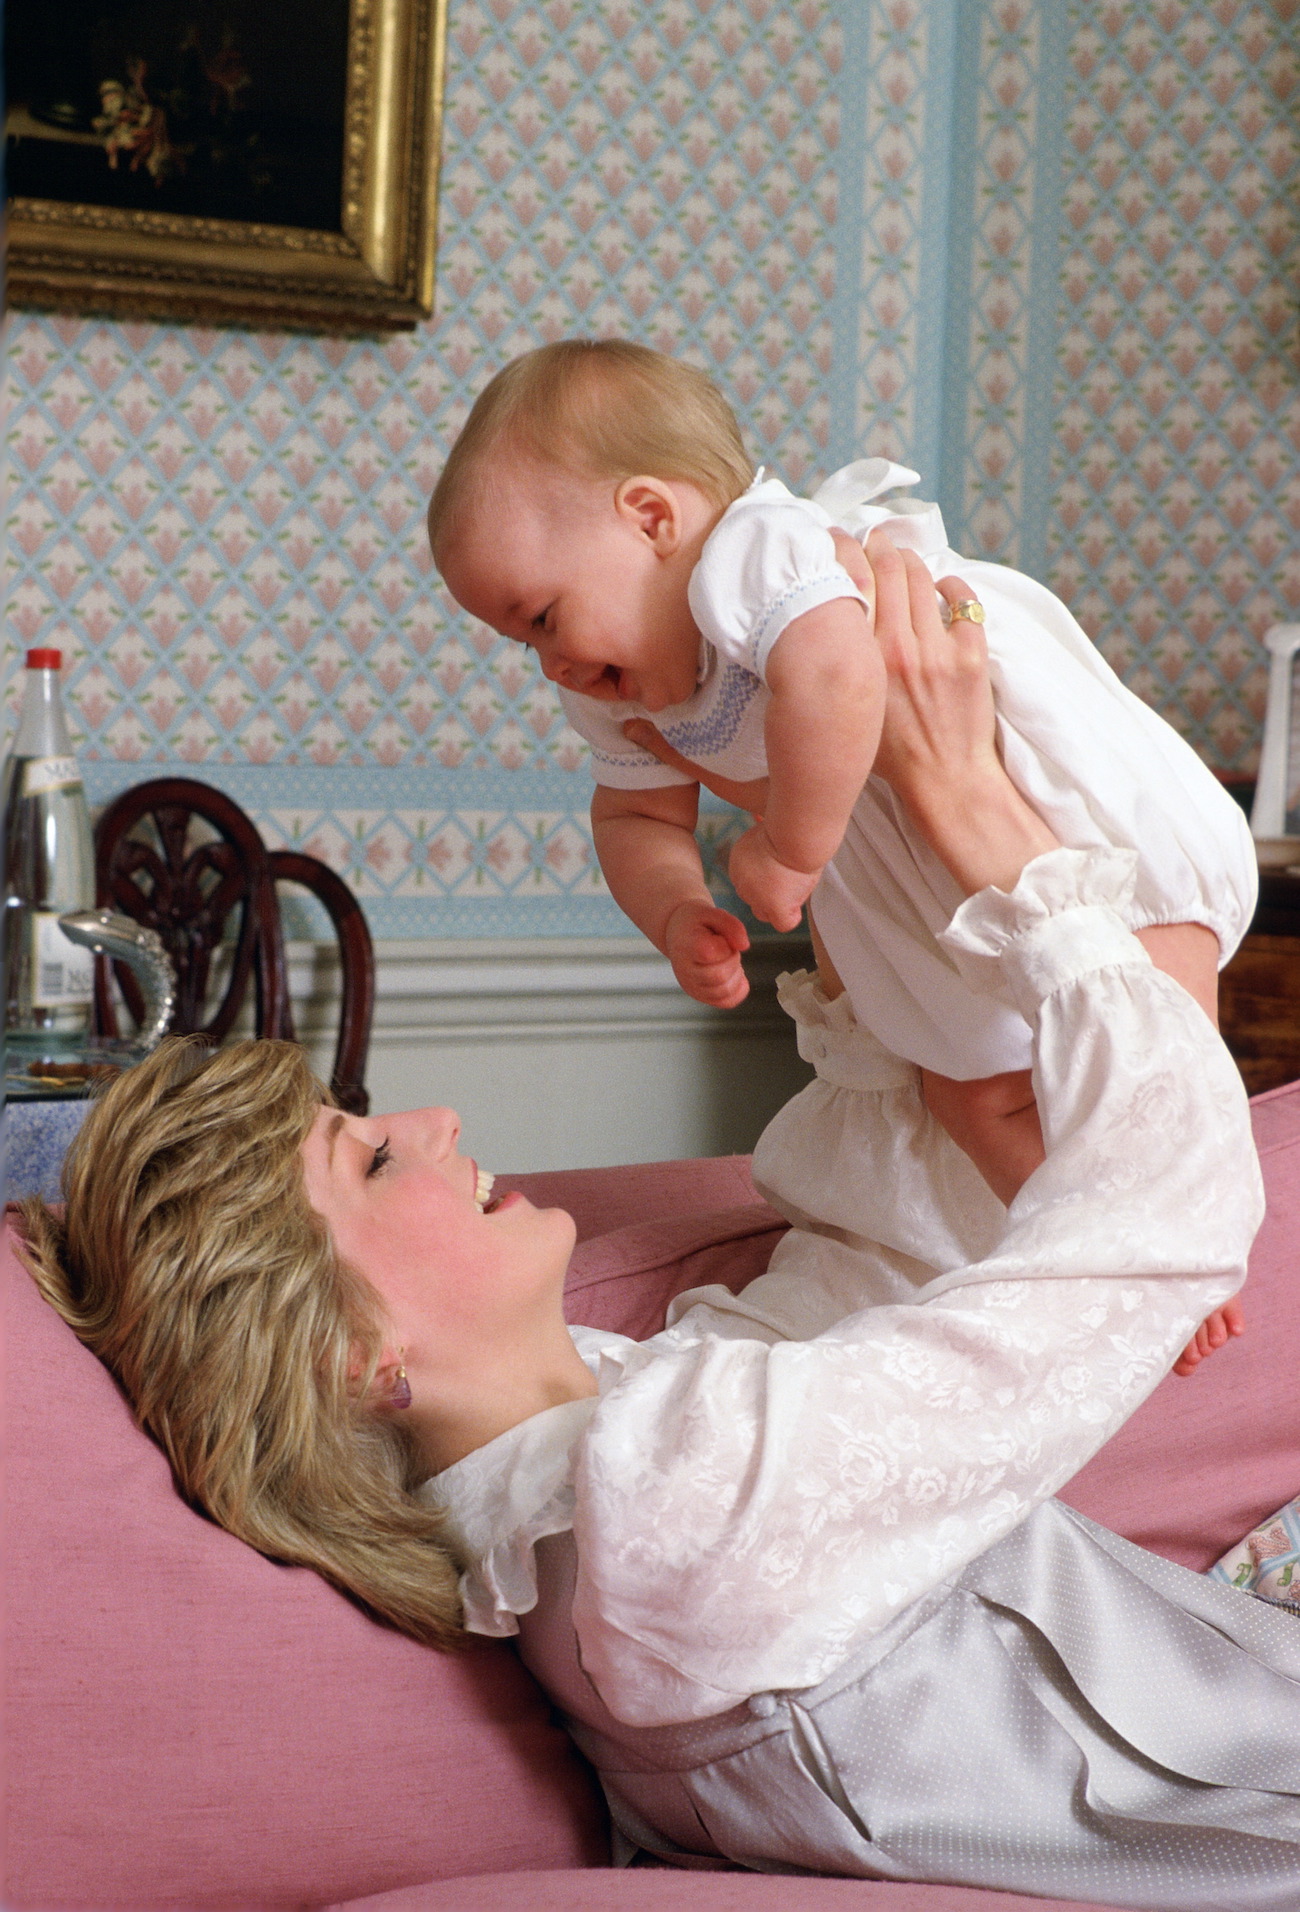 Princess Diana holding an infant Prince William